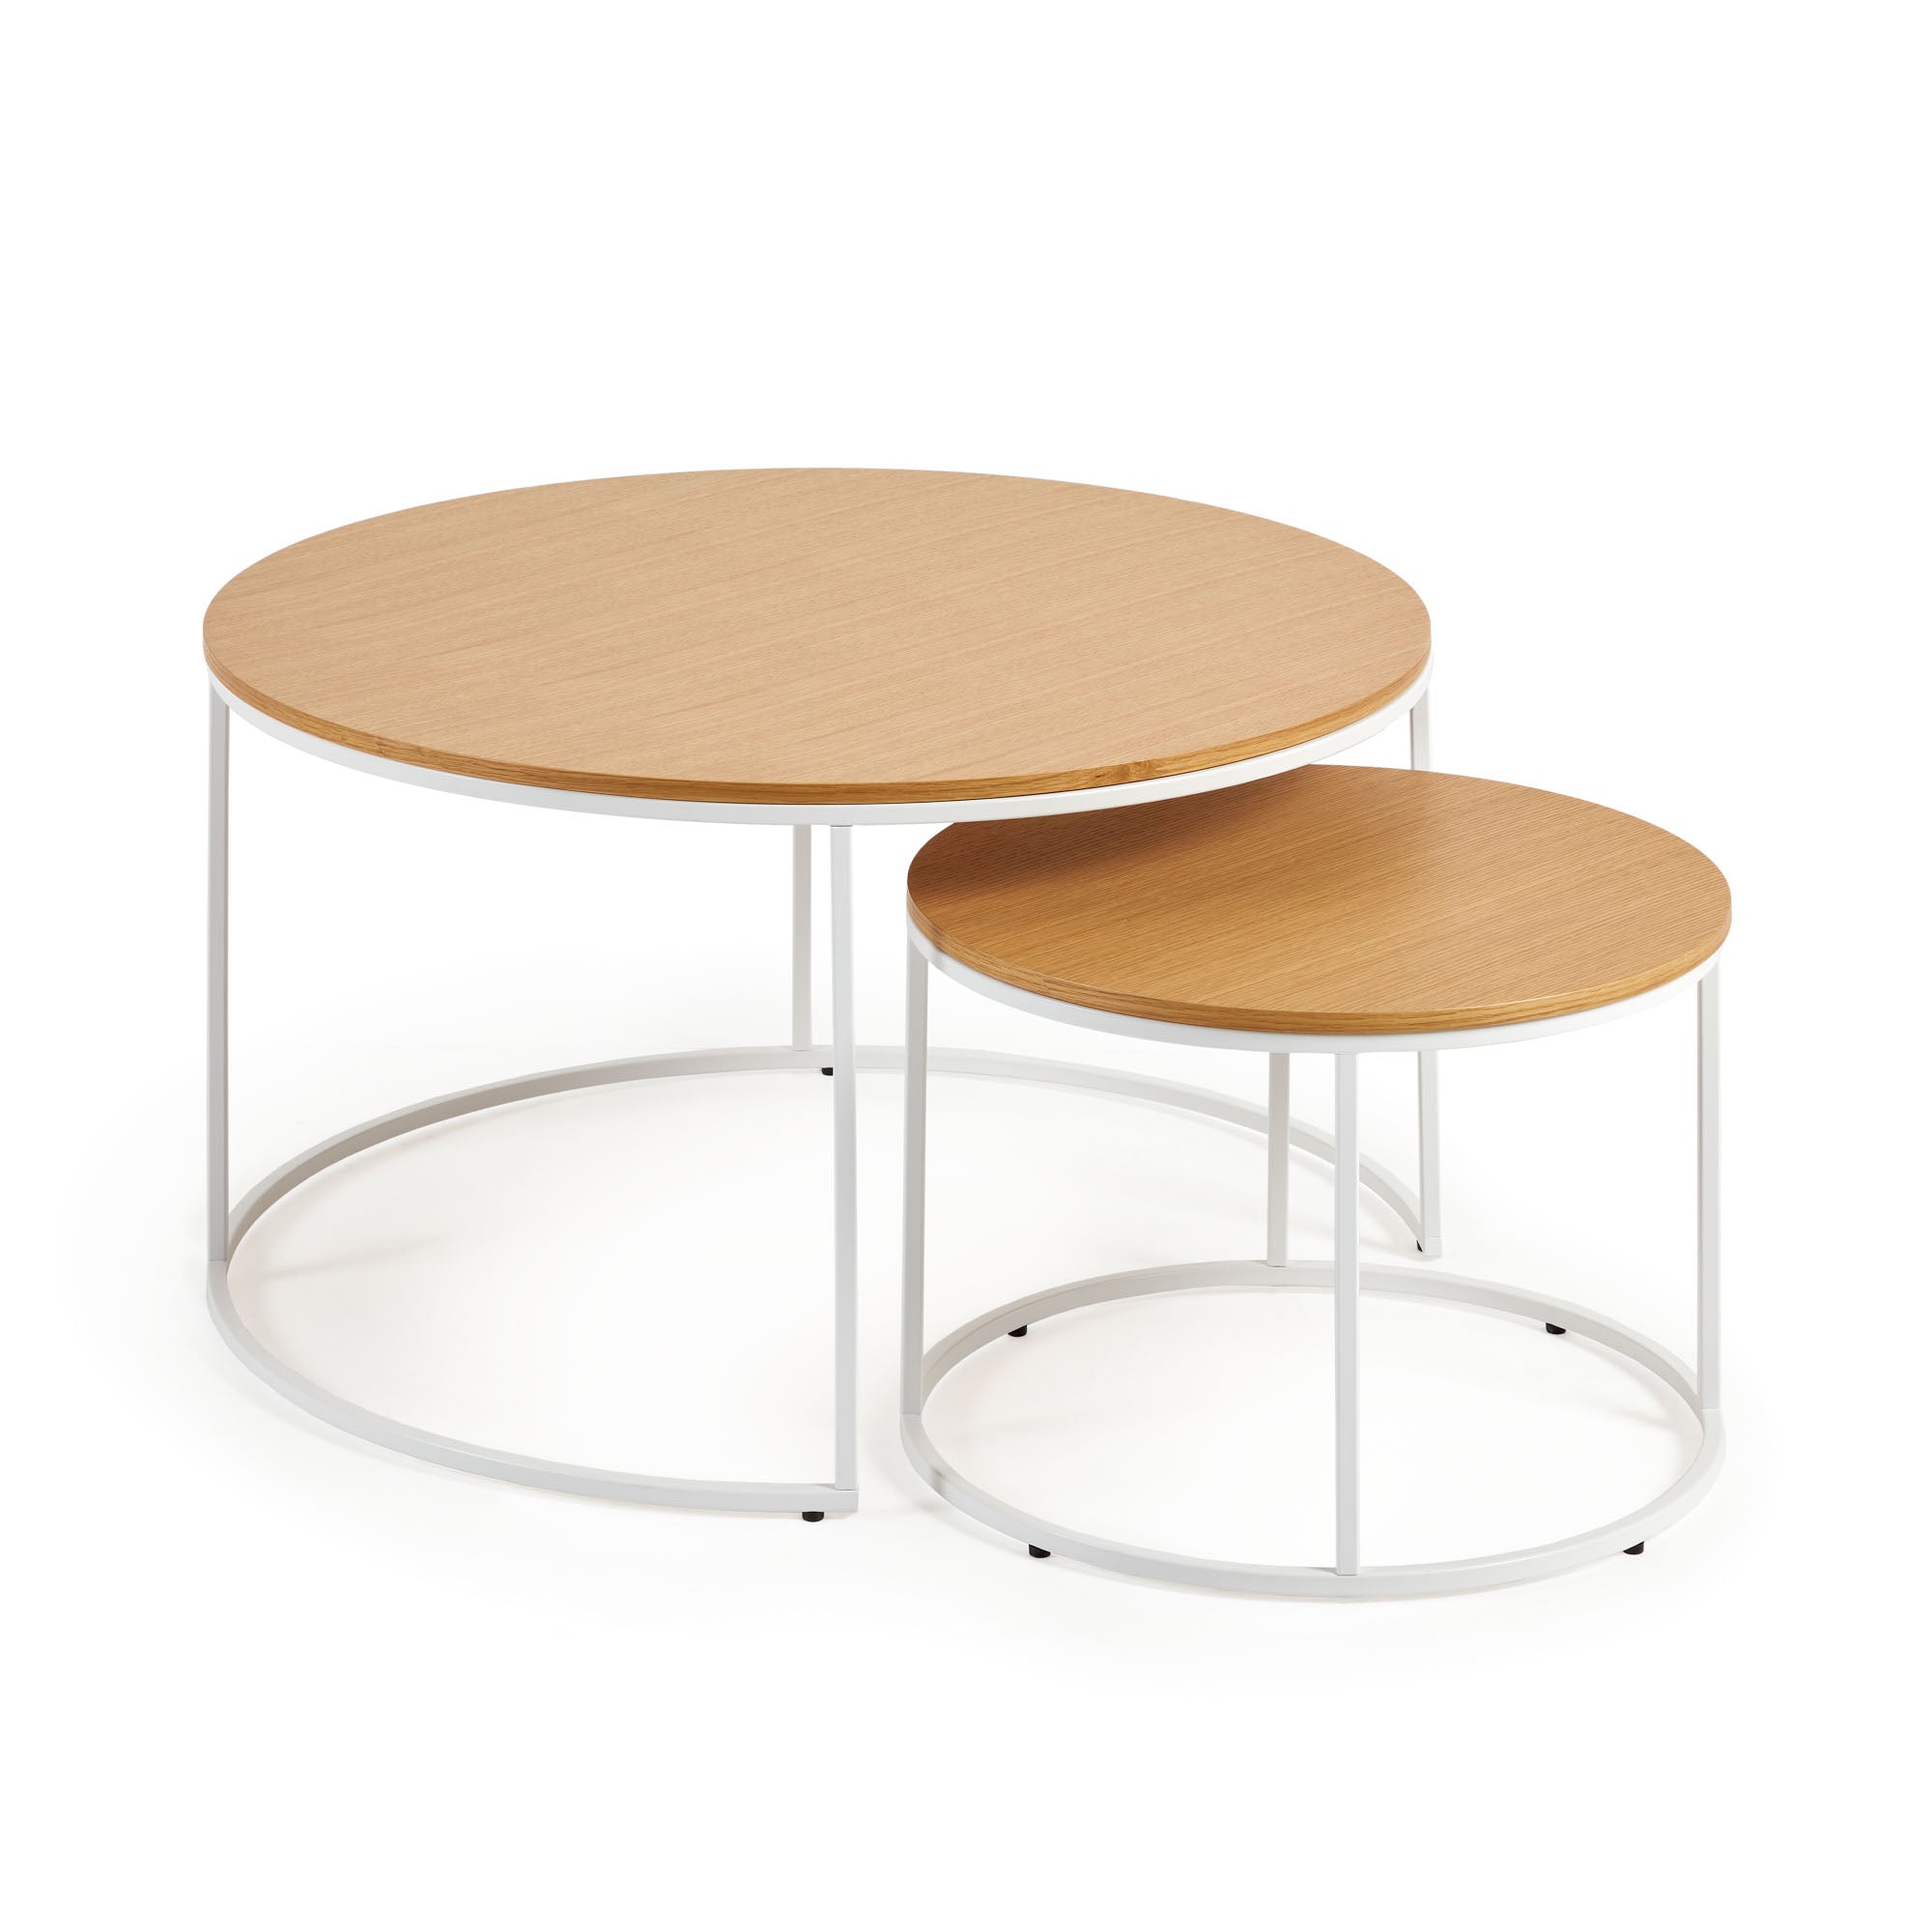 Yoana set of 2 nesting side tables, with oak wood veneer & white metal, Ø 80 cm / Ø 50 cm